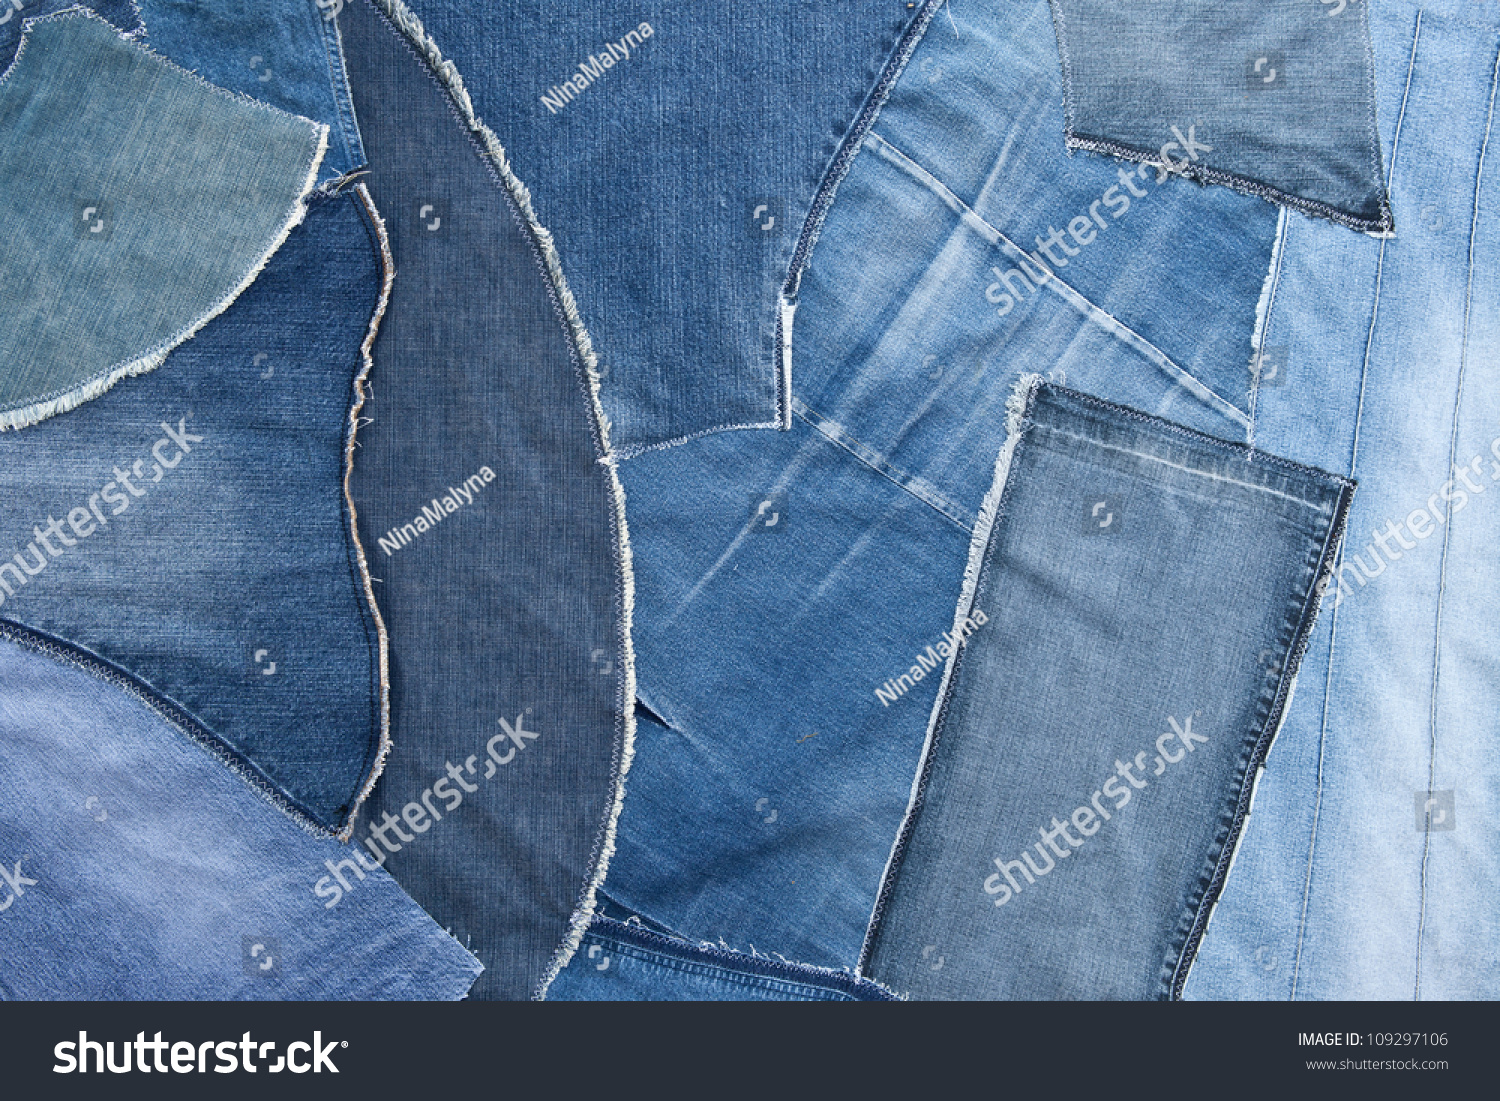 PowerPoint Template: denim jeans background (ihujuoihn)